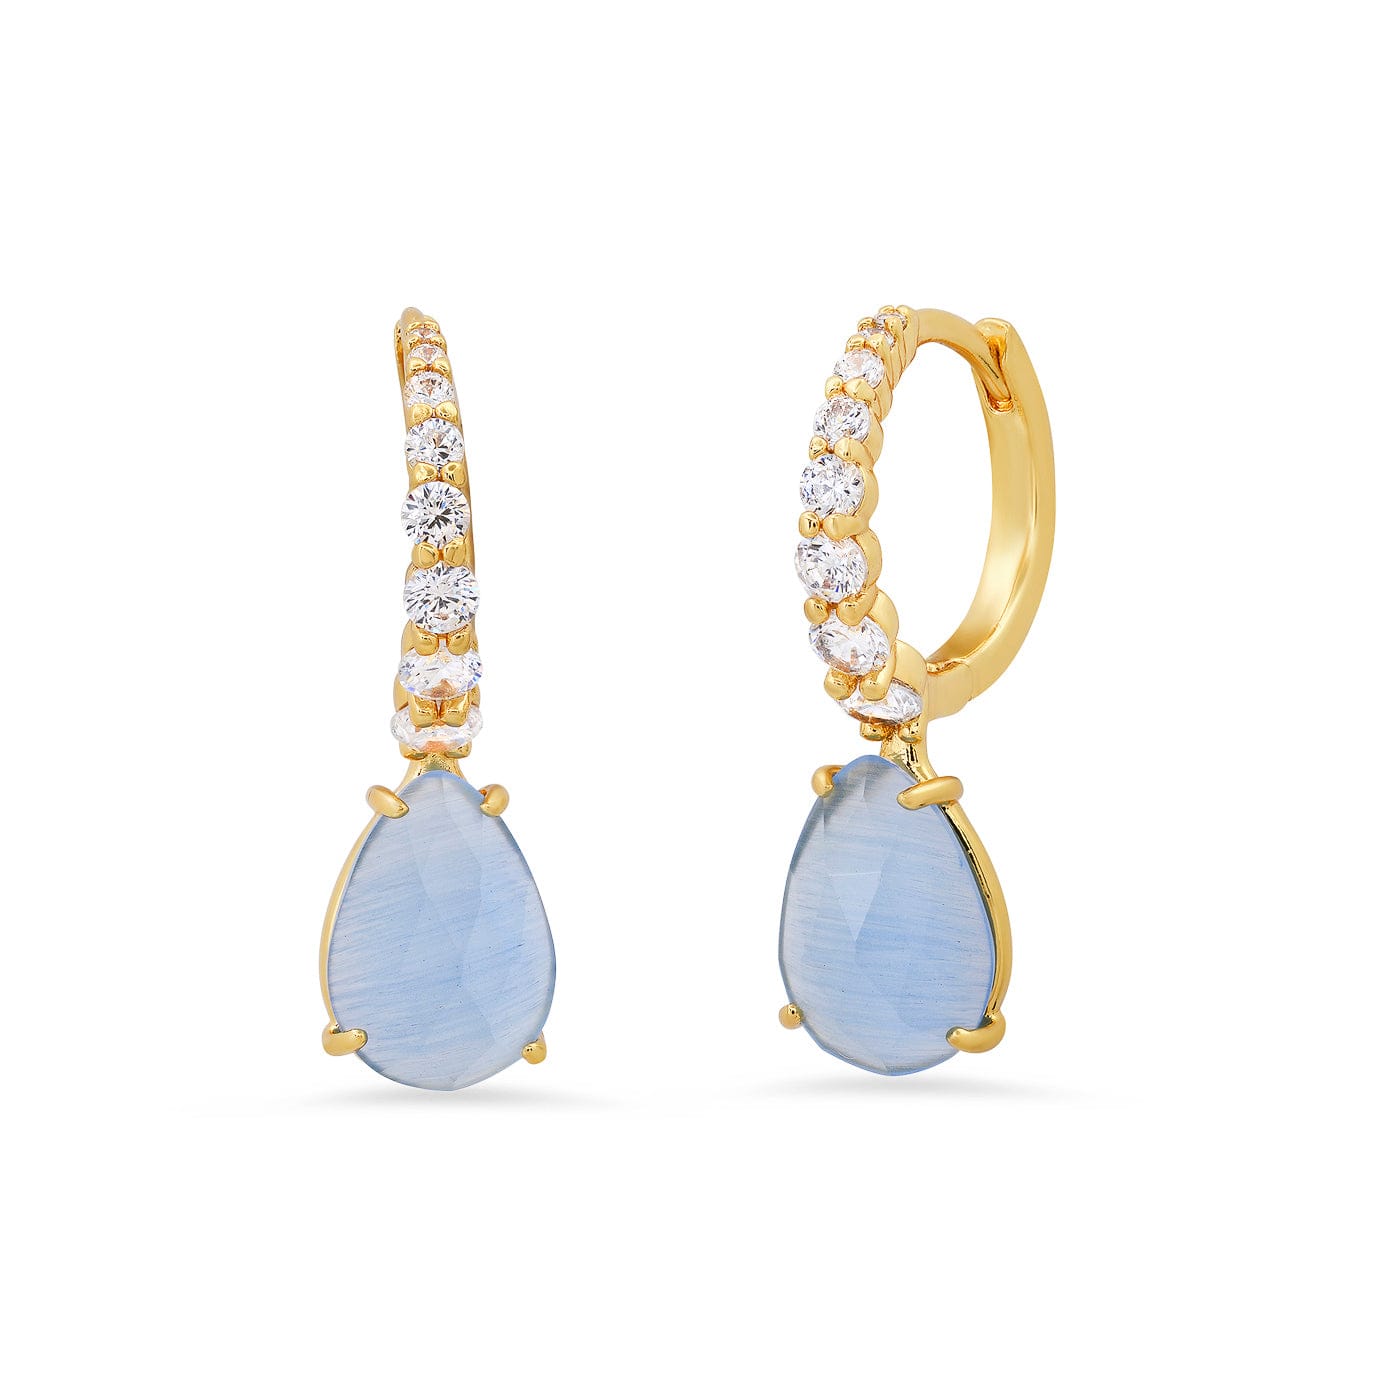 TAI JEWELRY Earrings Blue Pave CZ Huggies with Pear Drop